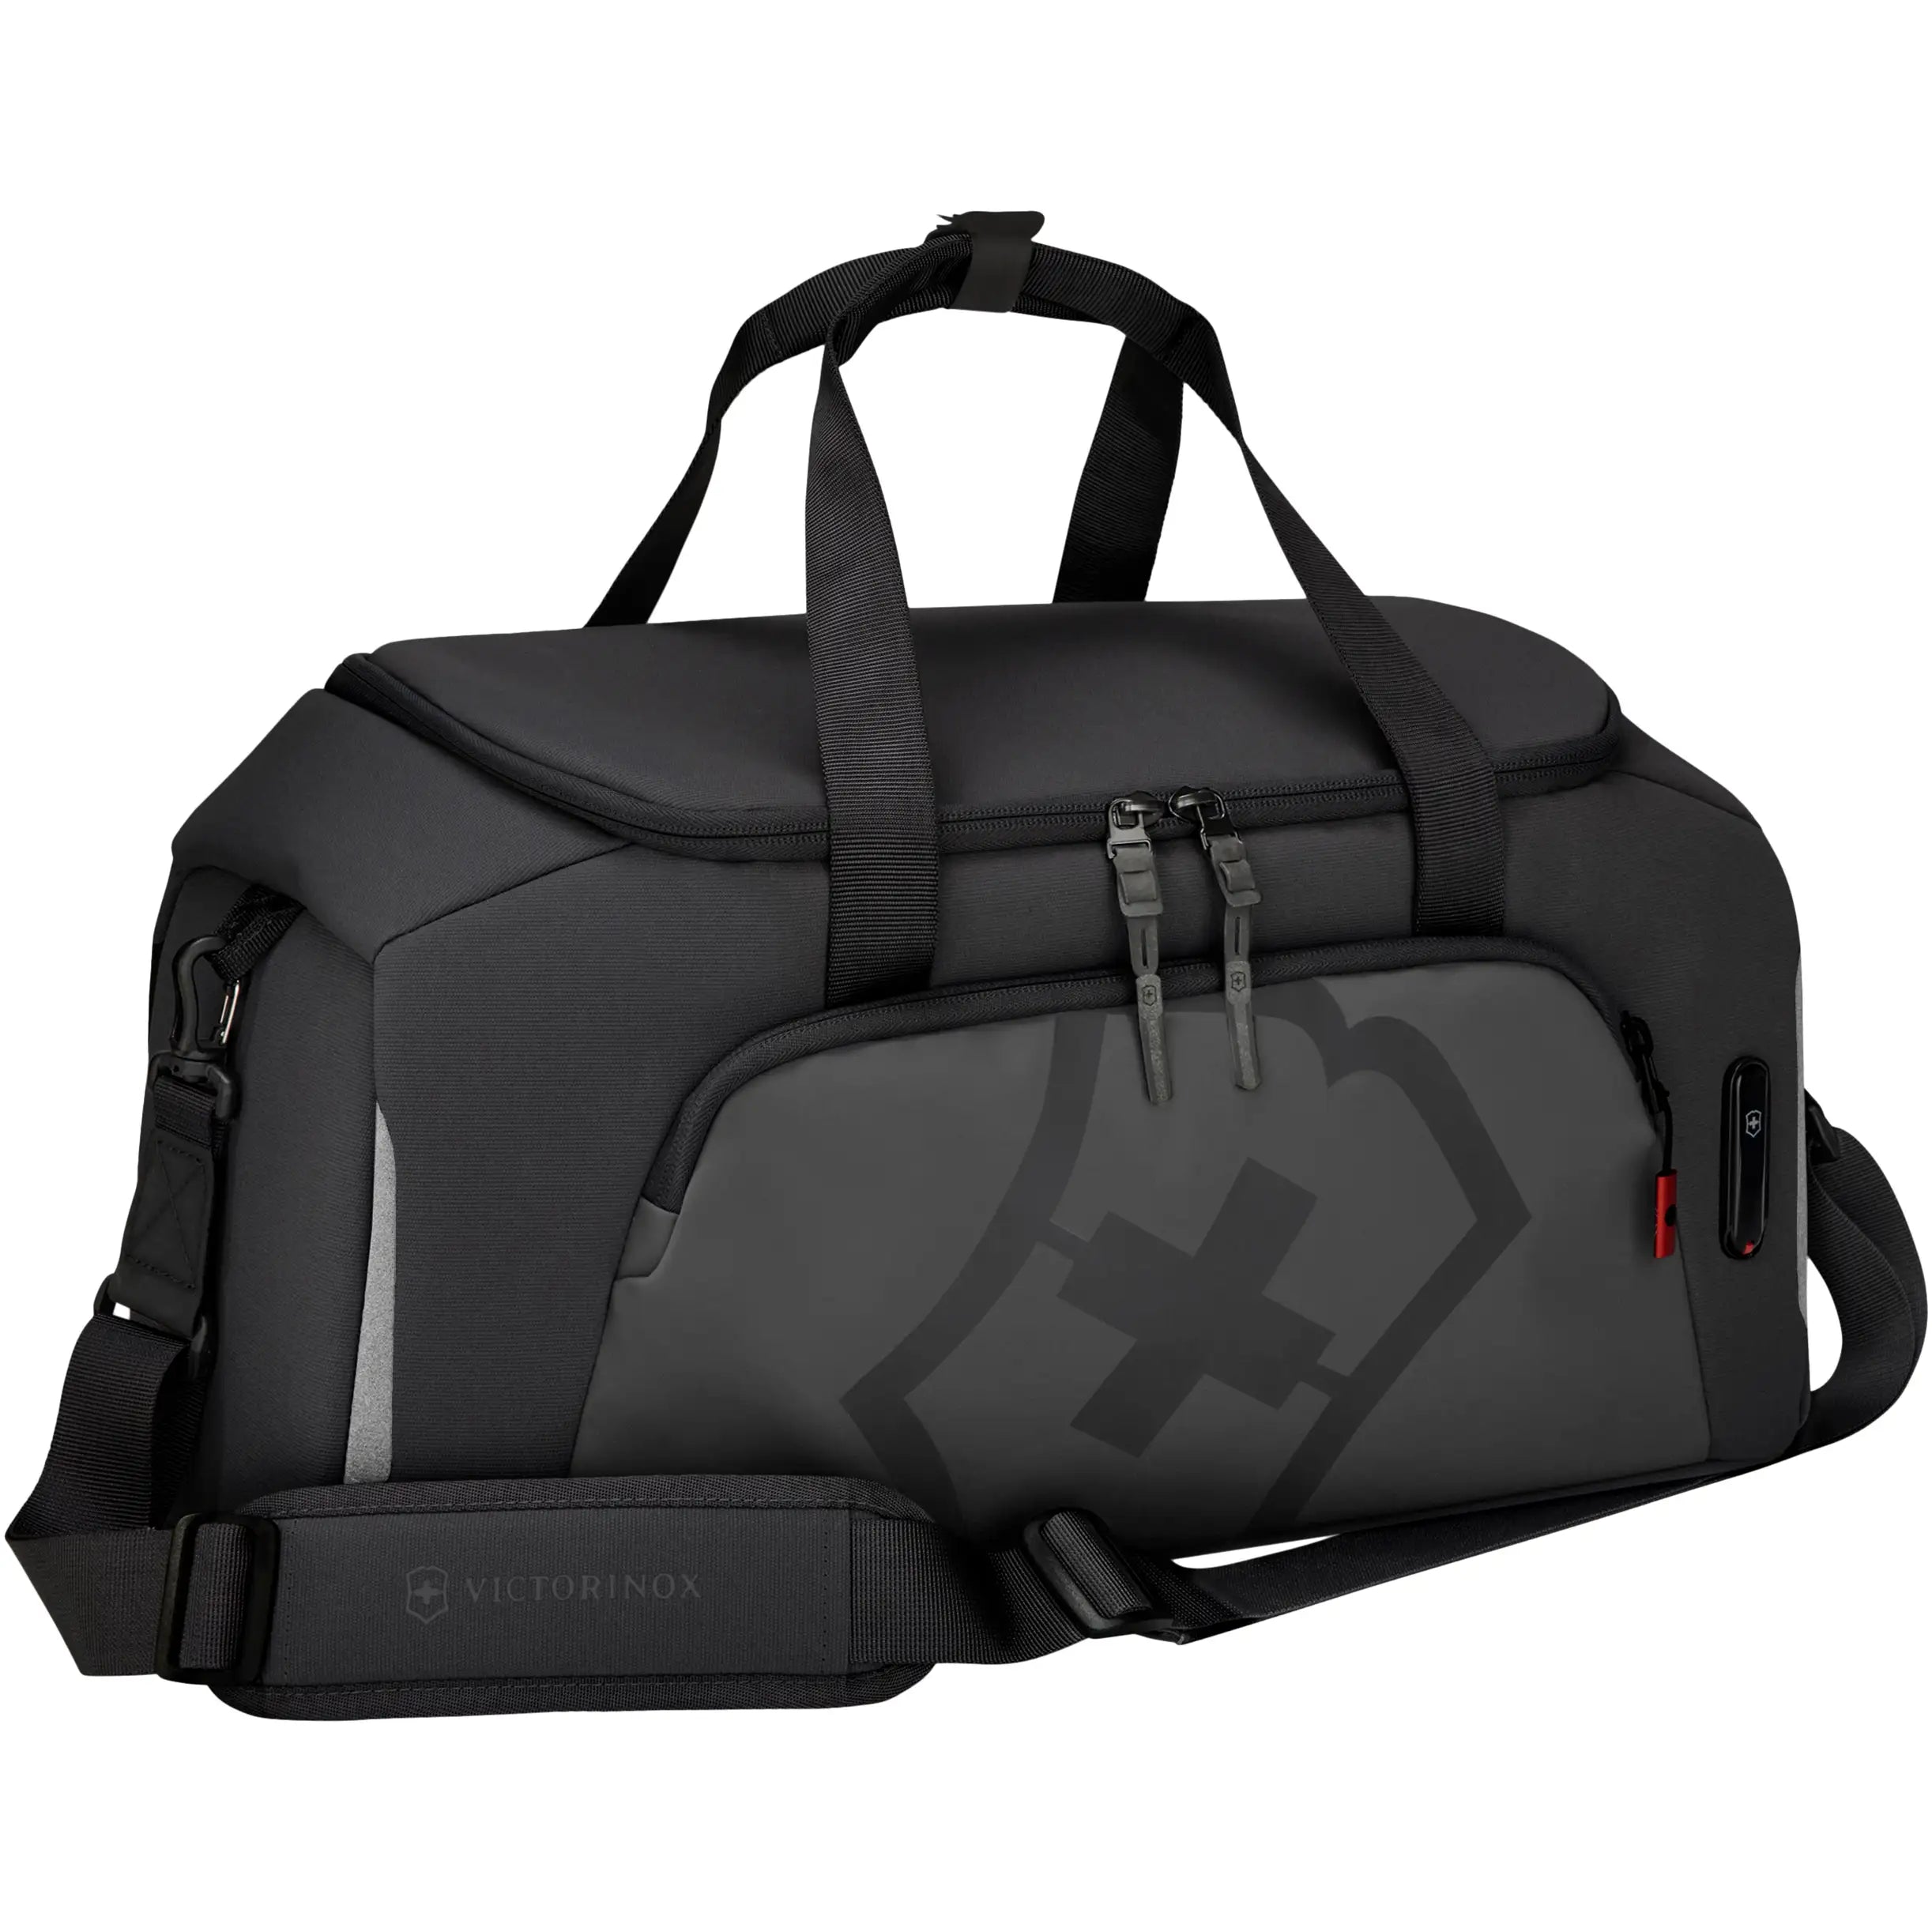 Victorinox Touring 2.0 Sports Duffel Travel Bag 50 cm - Black